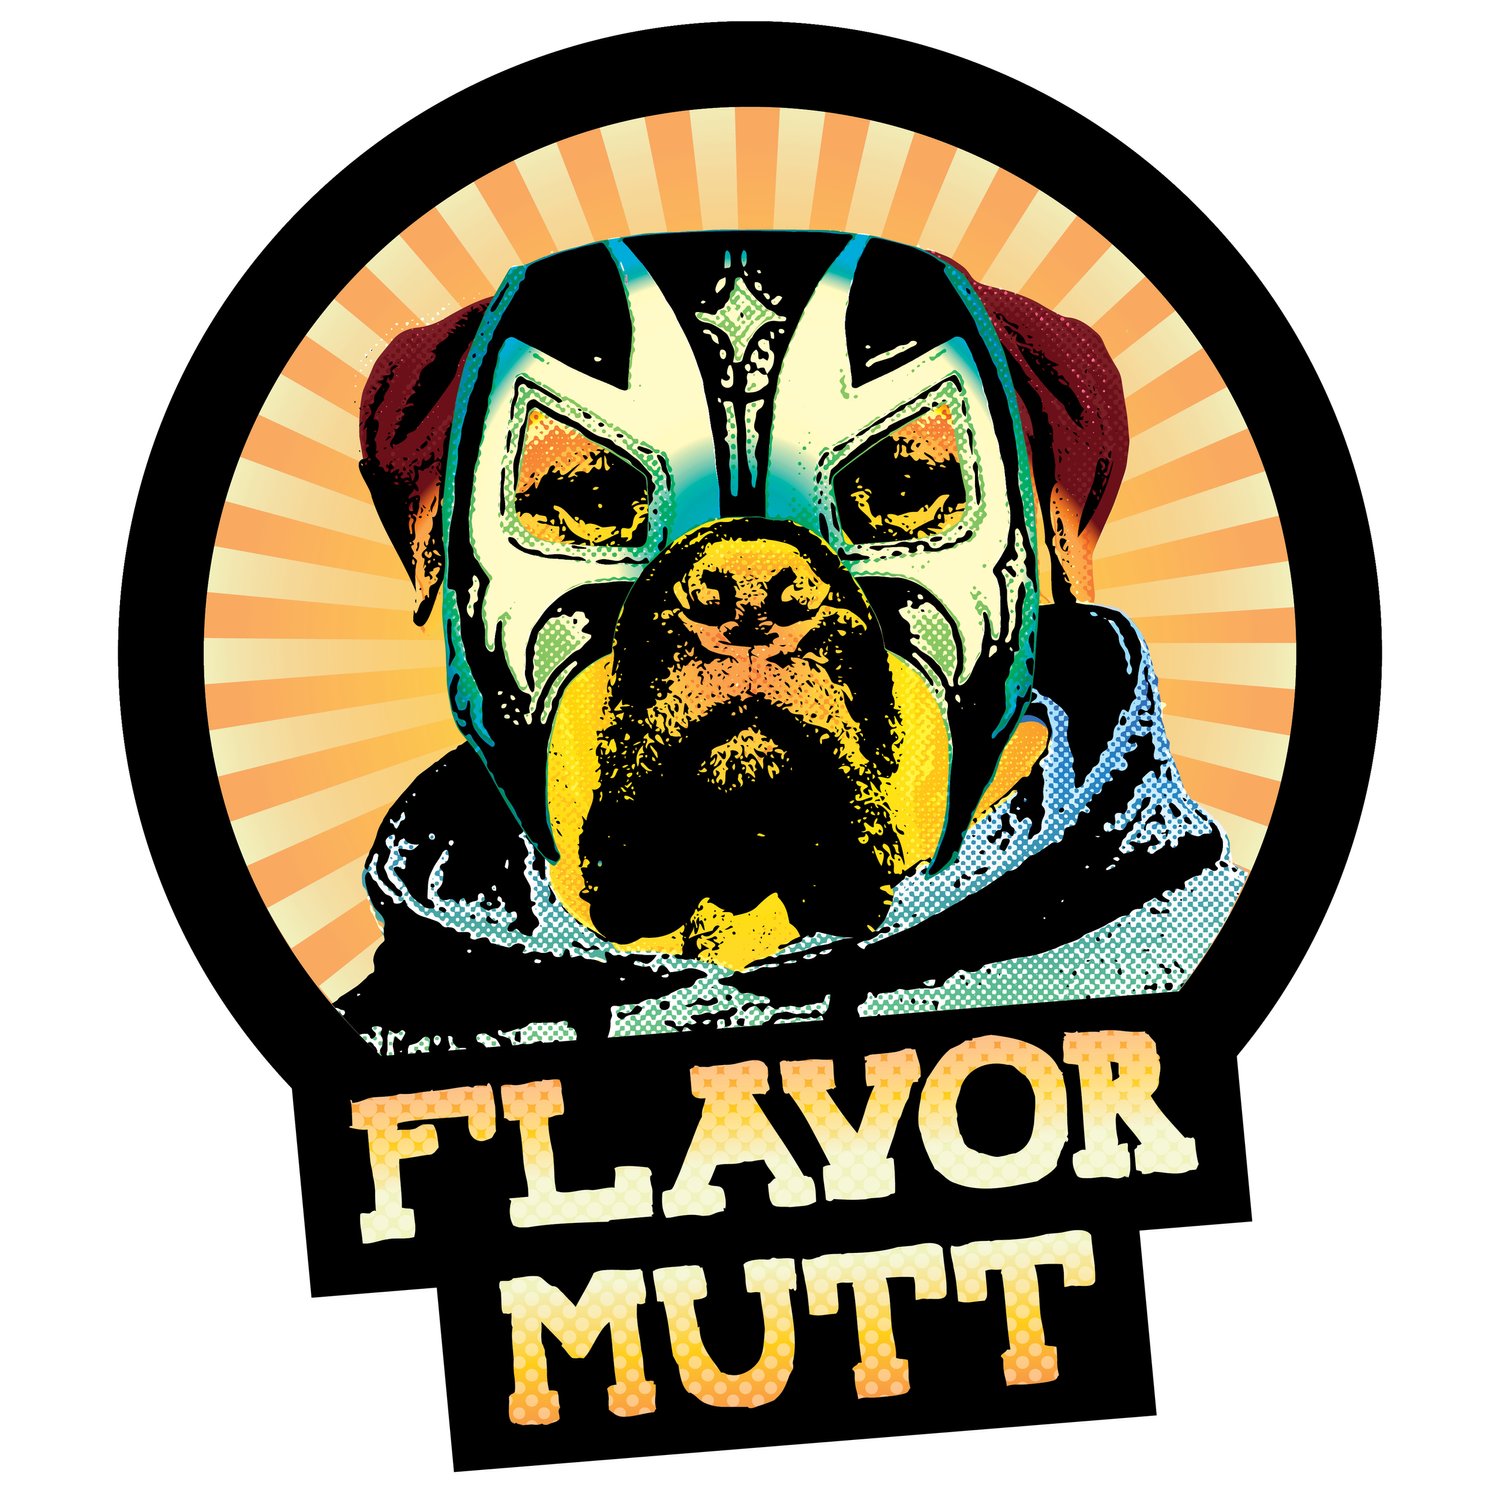 Flavor Mutt